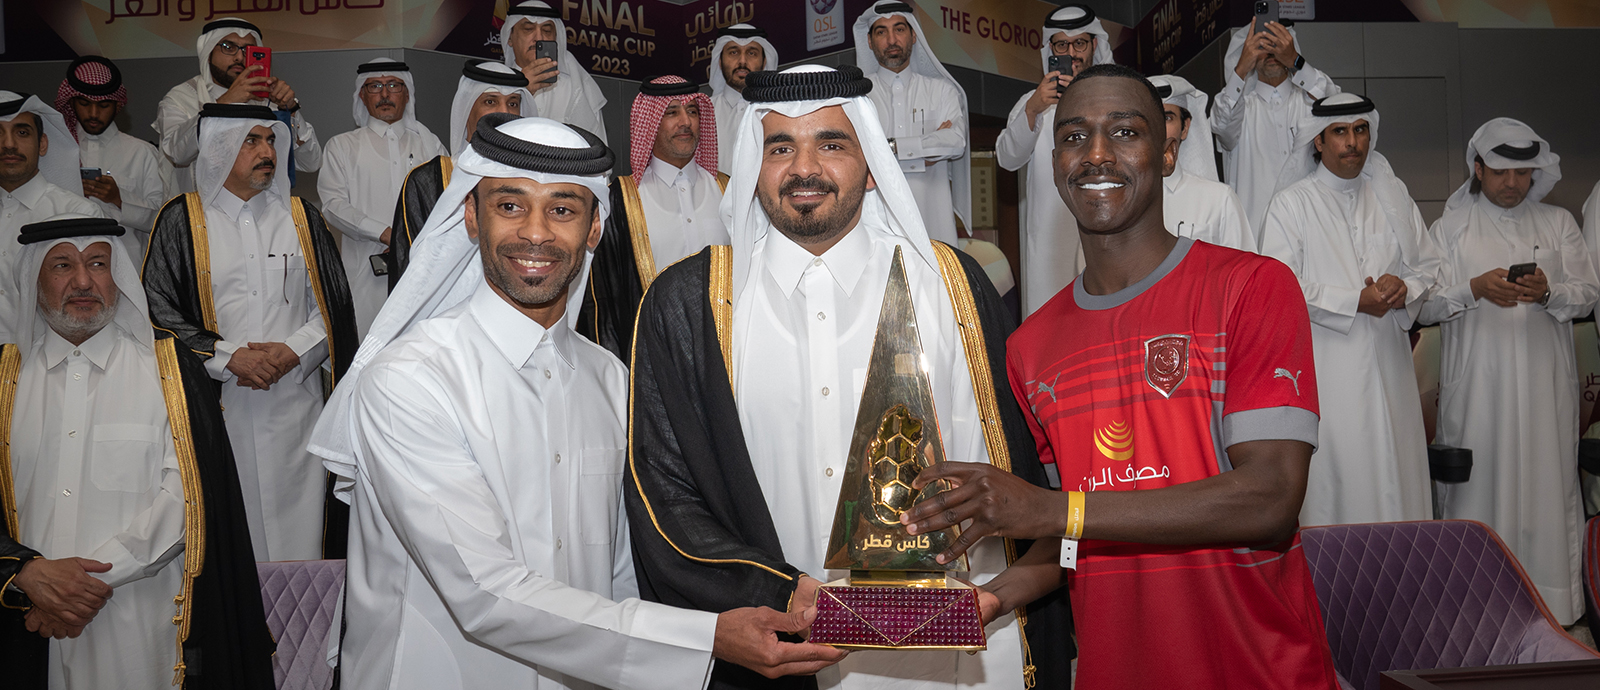 H E Sheikh Joaan bin Hamad Al Thani hands the trophy to Al Moeez Ali 